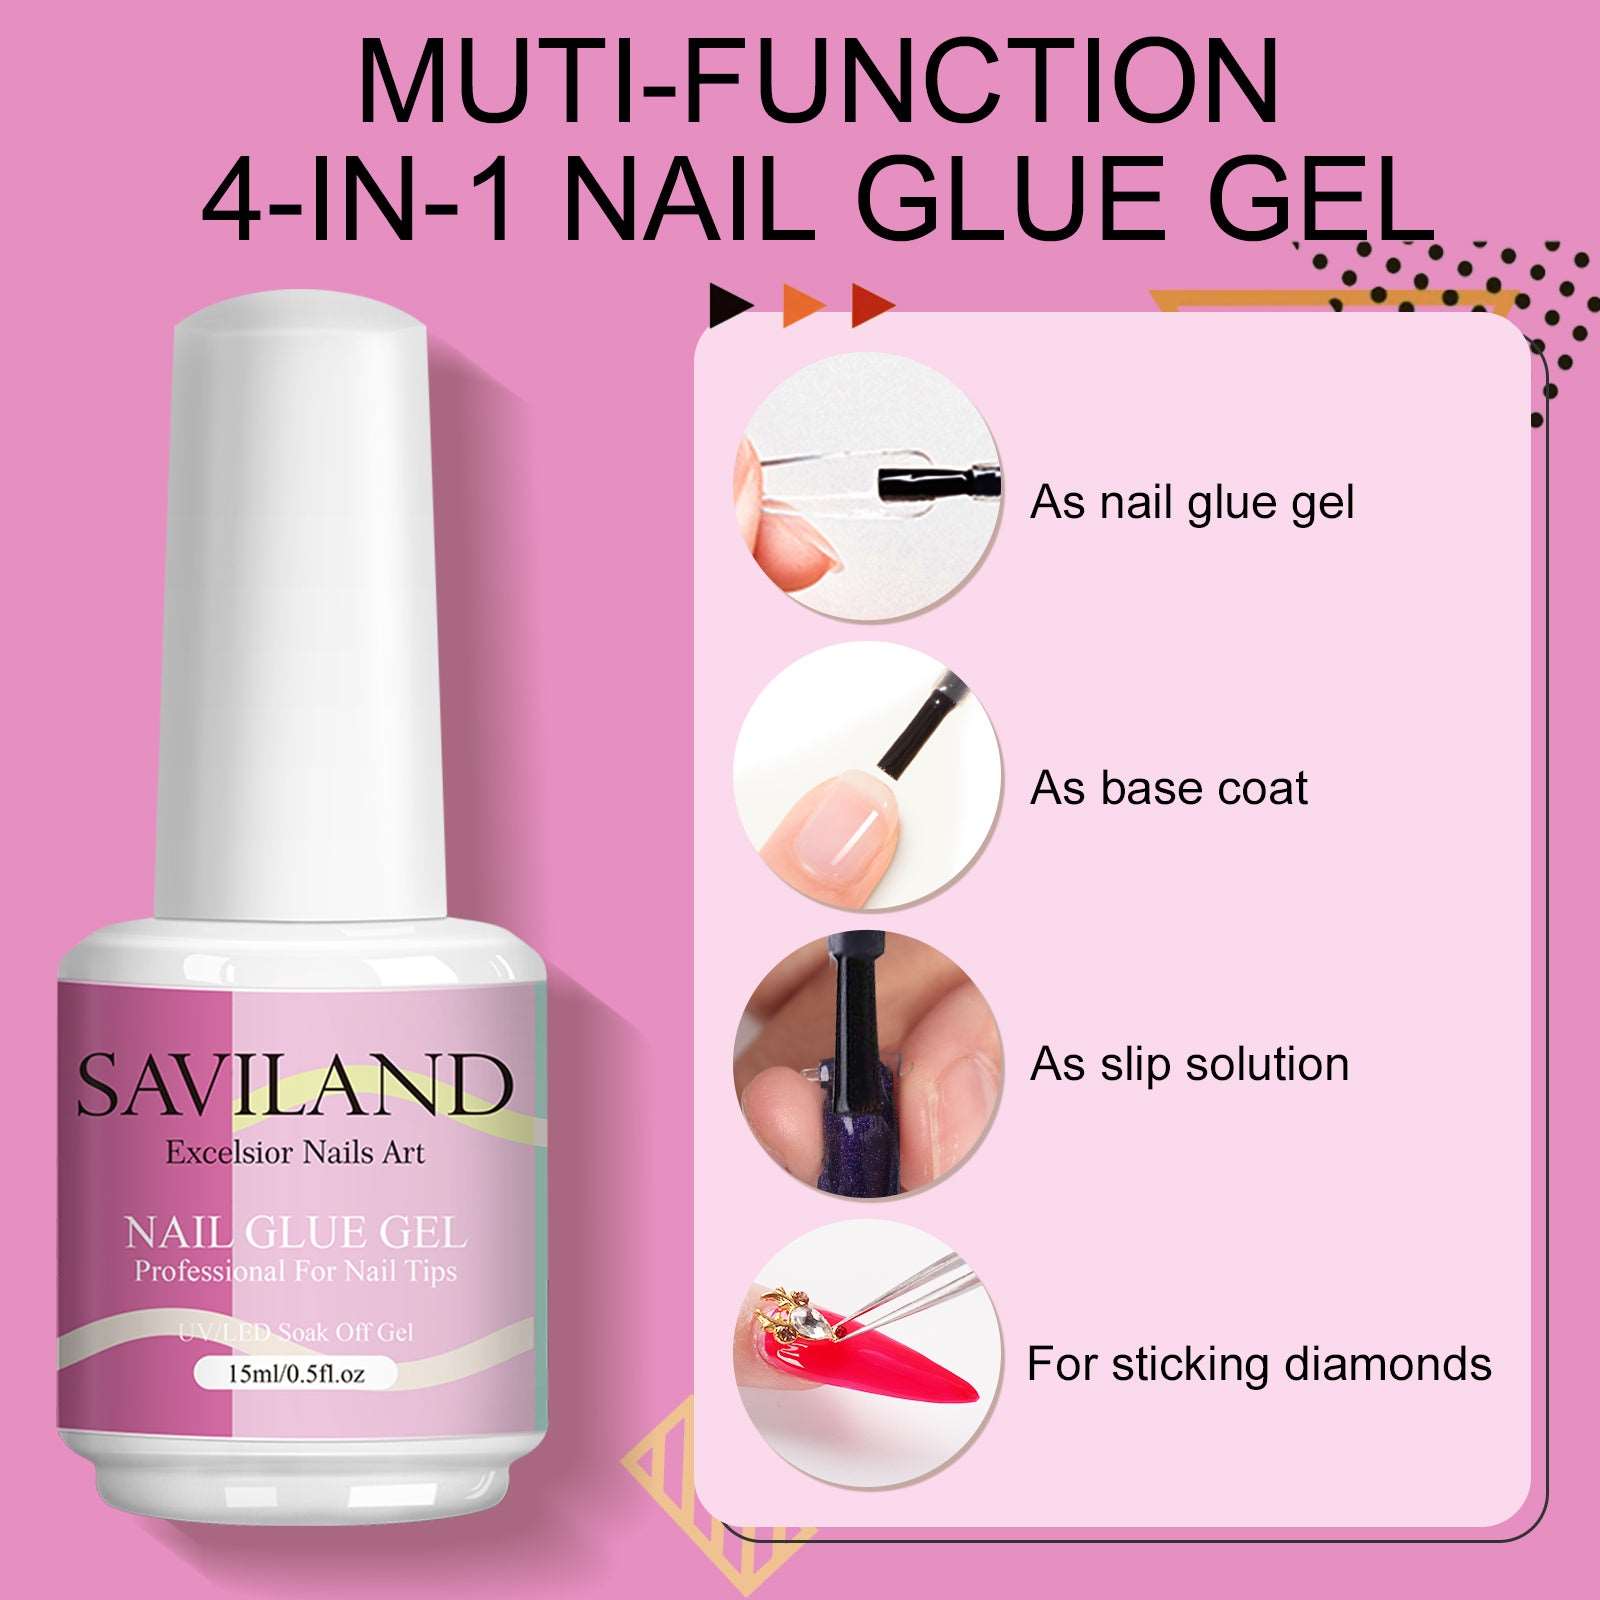 Saviland Nail Tip and Glue Gel Kit - Gel x Nail Kit with 500PCS Full Cover  Medium Square Soft Gel Nail Tips, Nail Glue Gel, Handheld Nail Lamp, Nail  Clipper for Acrylic